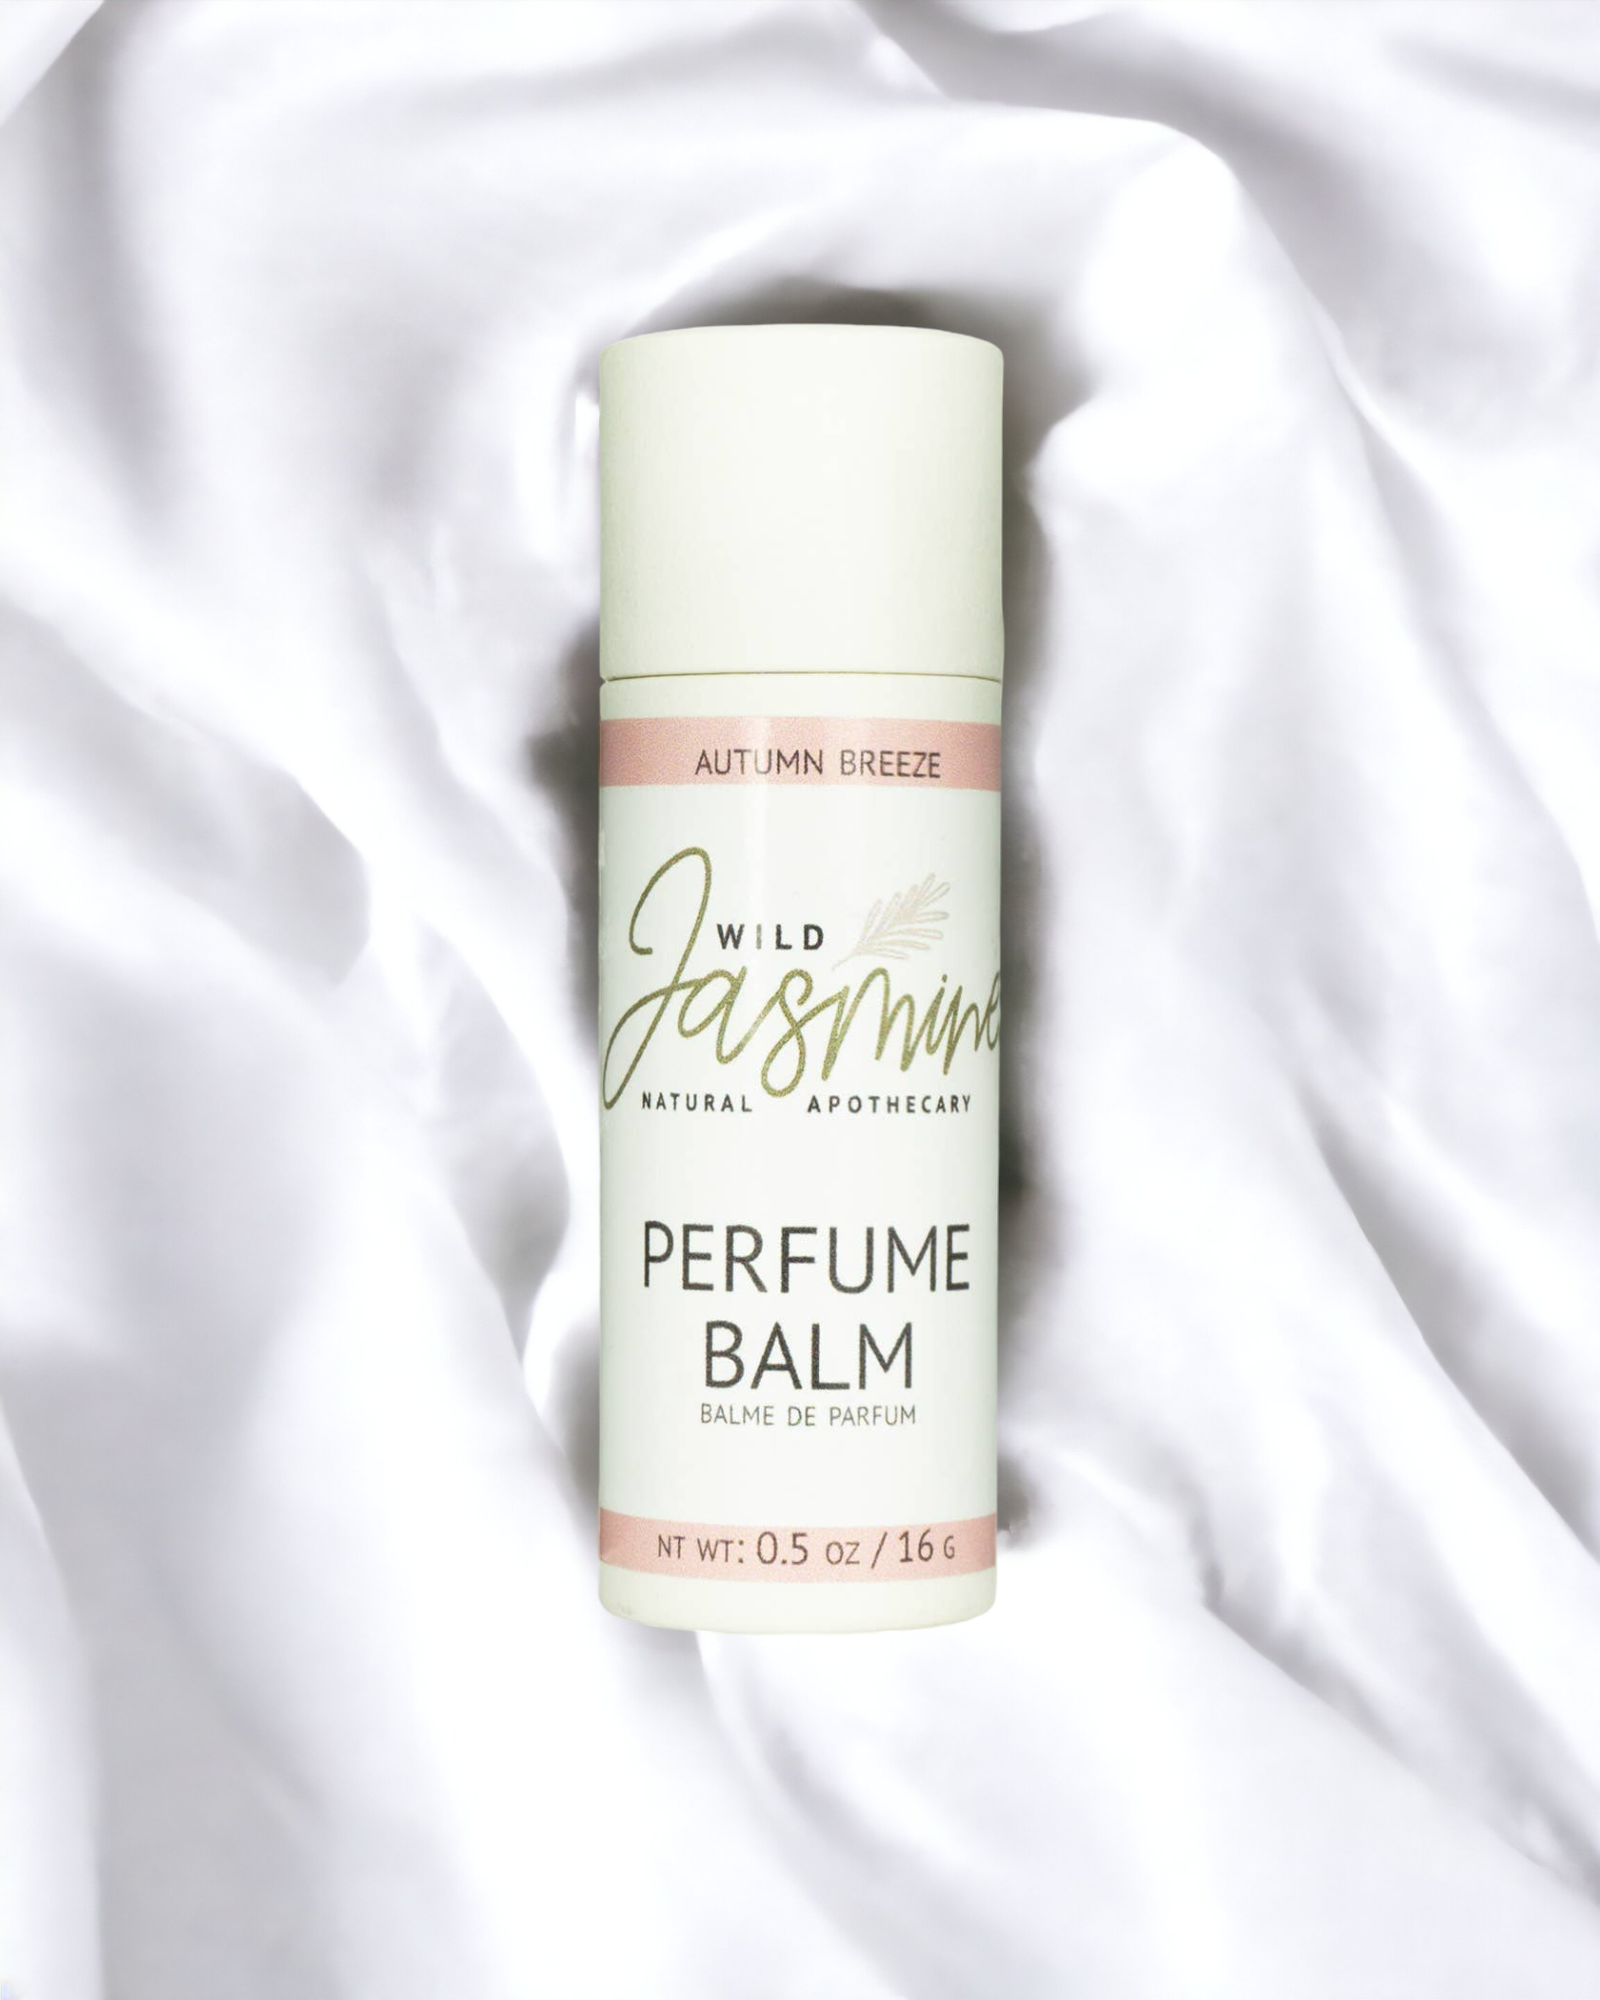 Perfume Balm - Autumn Breeze